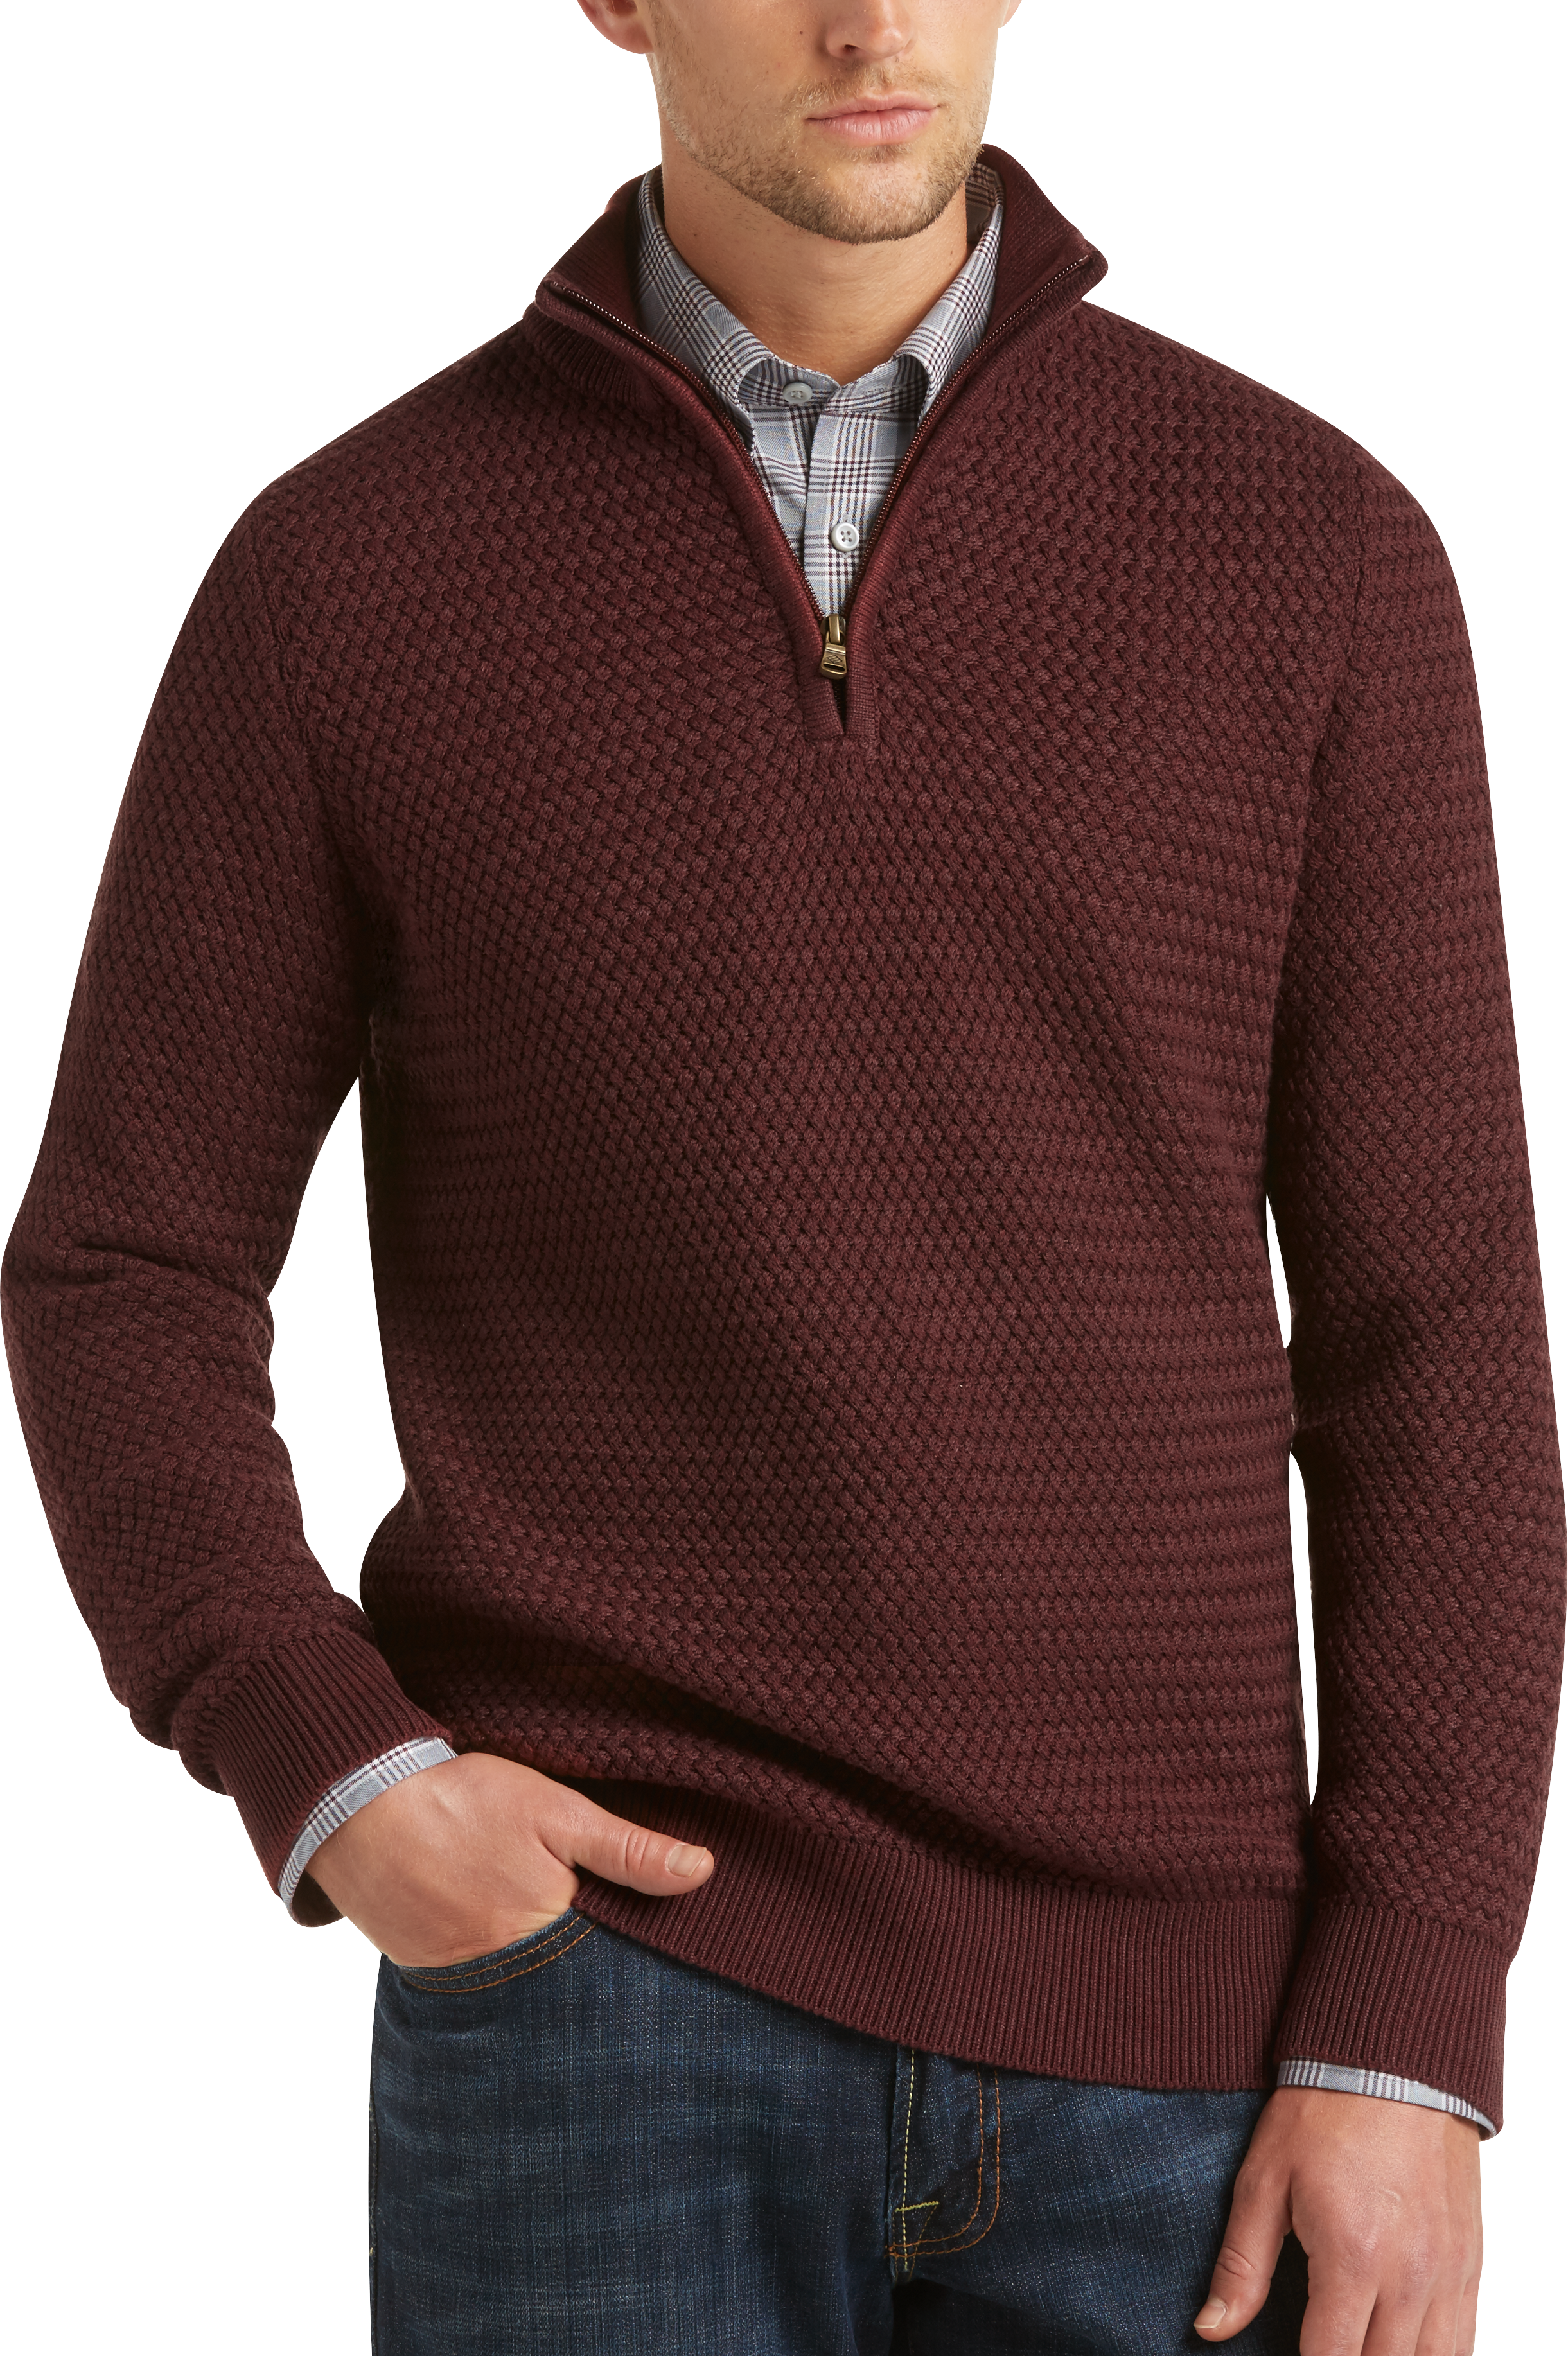 Joseph Abboud Black Polo Collar Merino Wool Sweater - Men's Sweaters ...